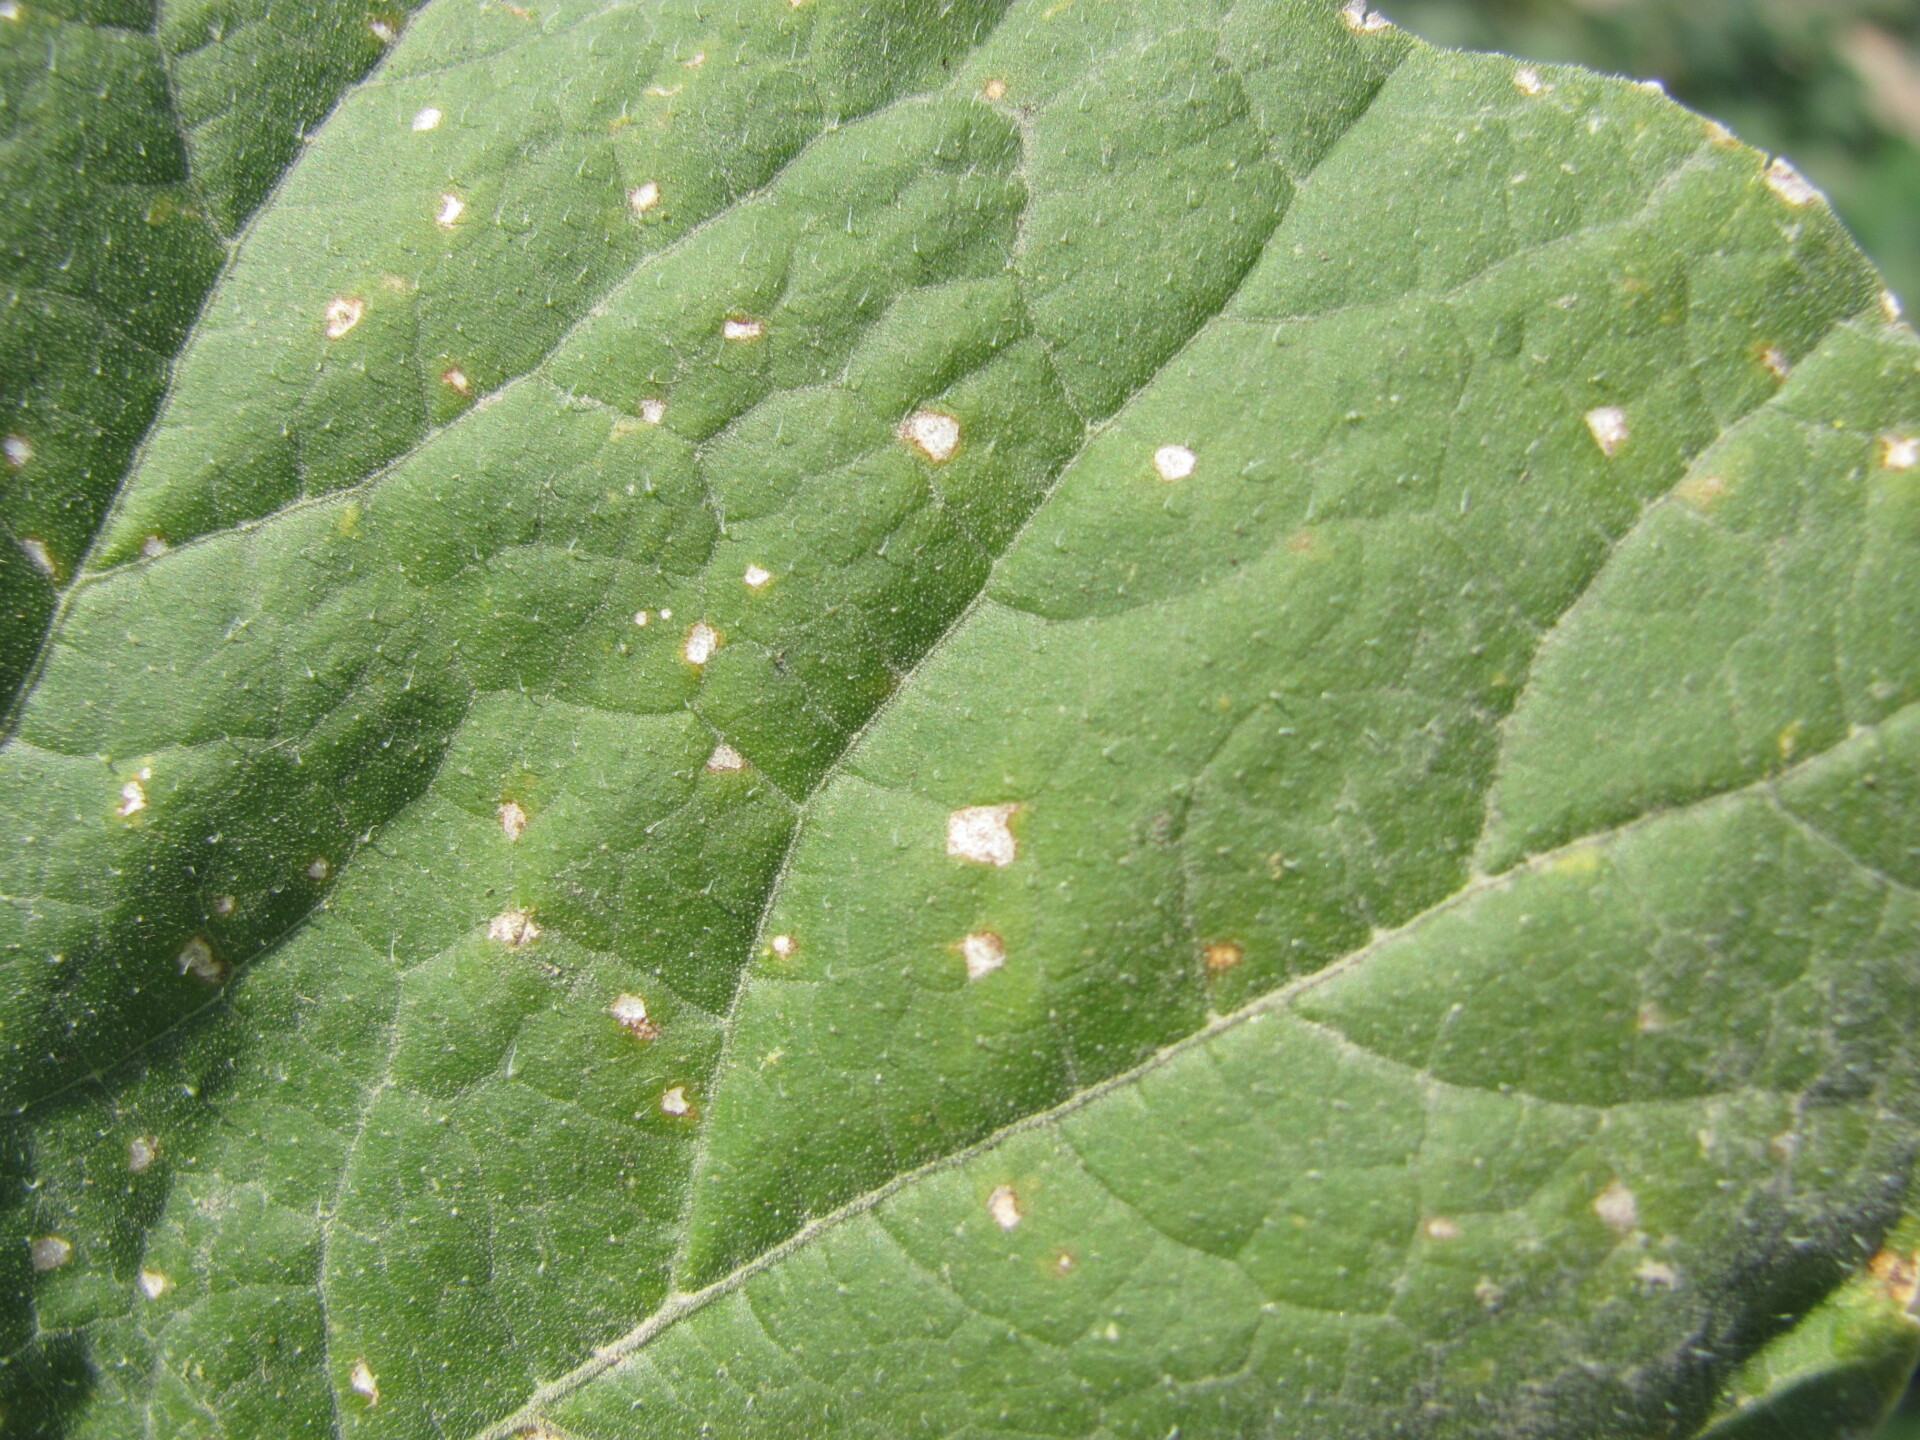 Figure 3. Cercospora leaf spot of pumpkin.